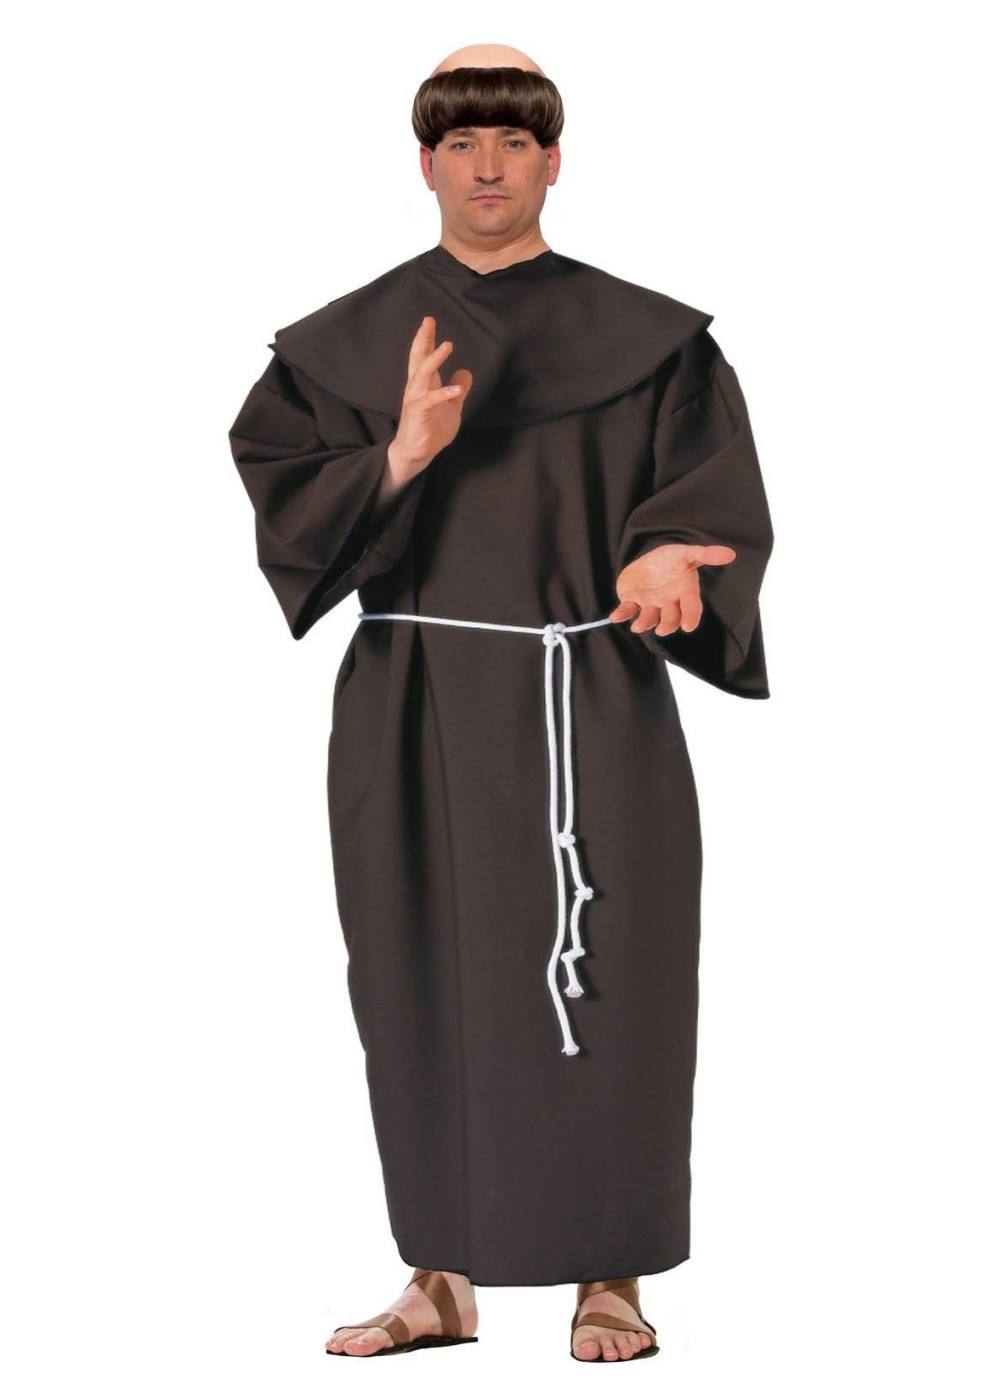 Mens Monk Costume